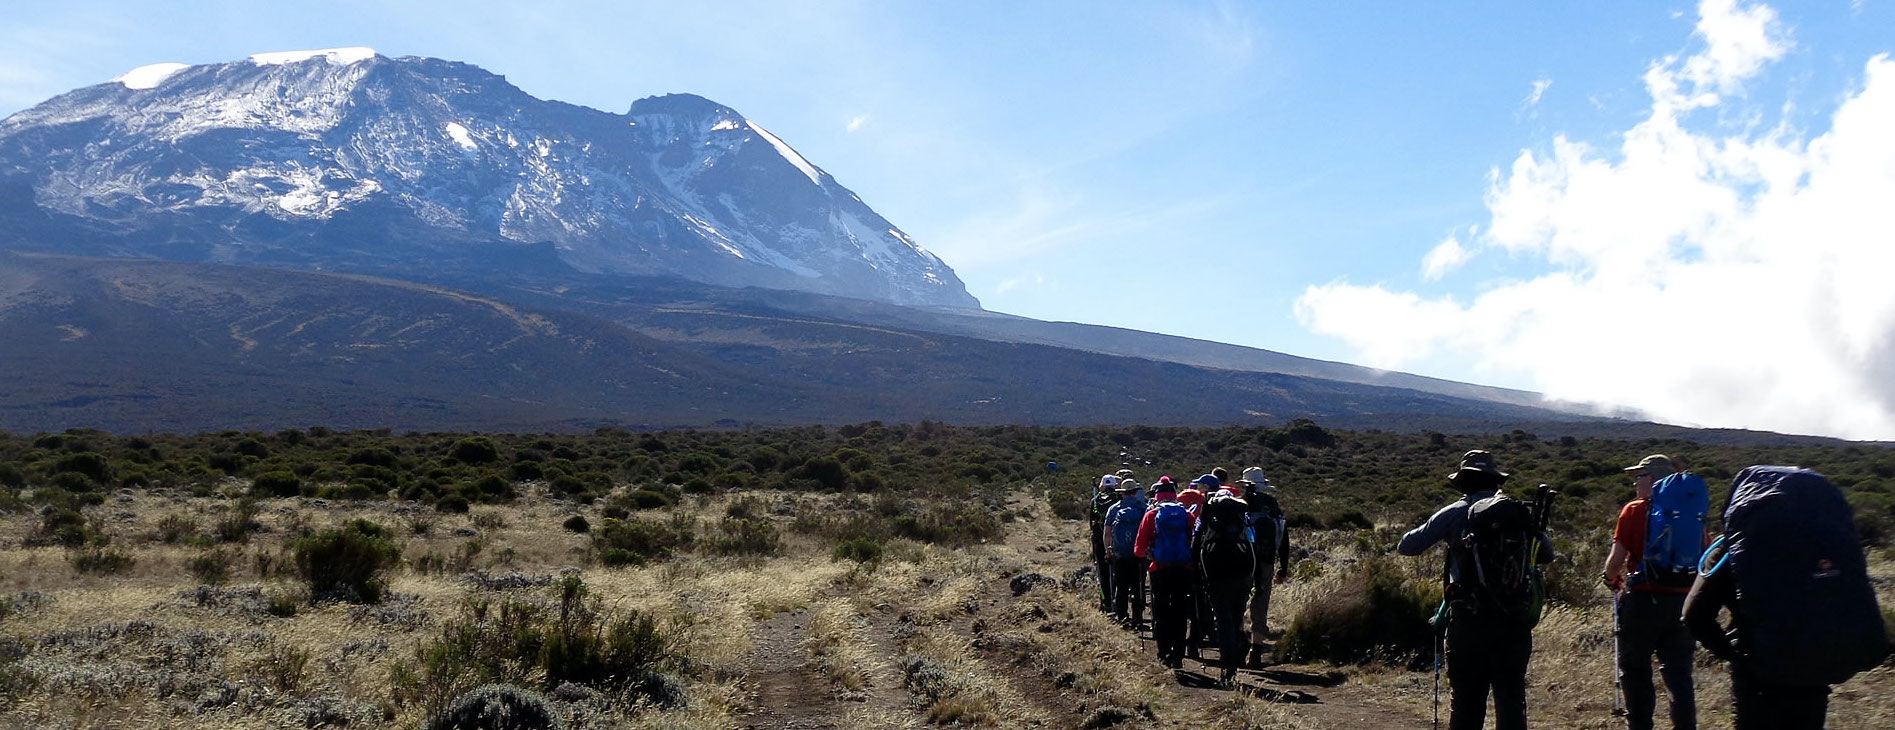 Kilimanjaro Routes – Mount Kilimanjaro Climbing Trails